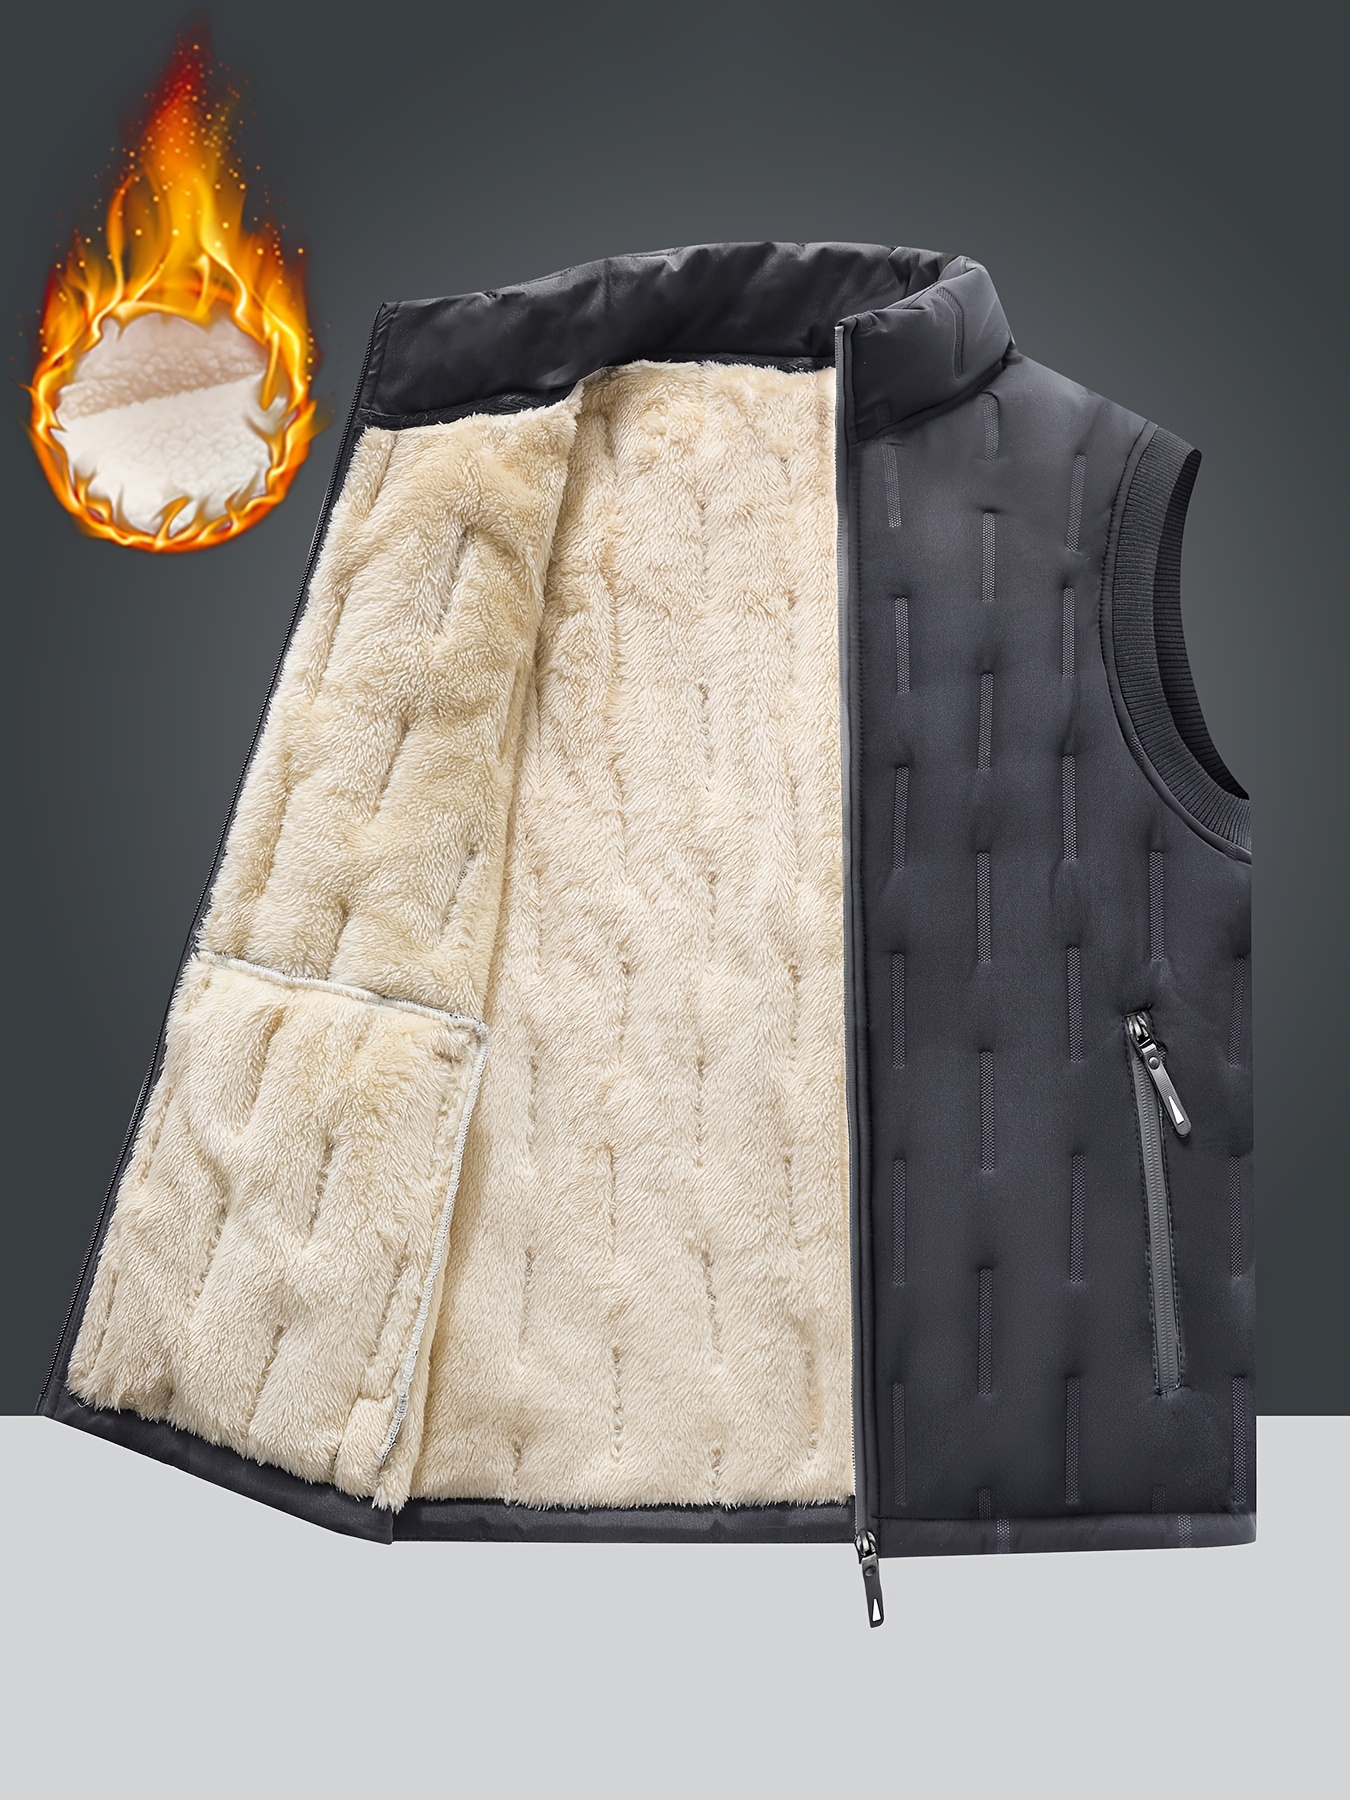 mens warm fleece winter vest casual stand collar warm thick zipper pockets vest